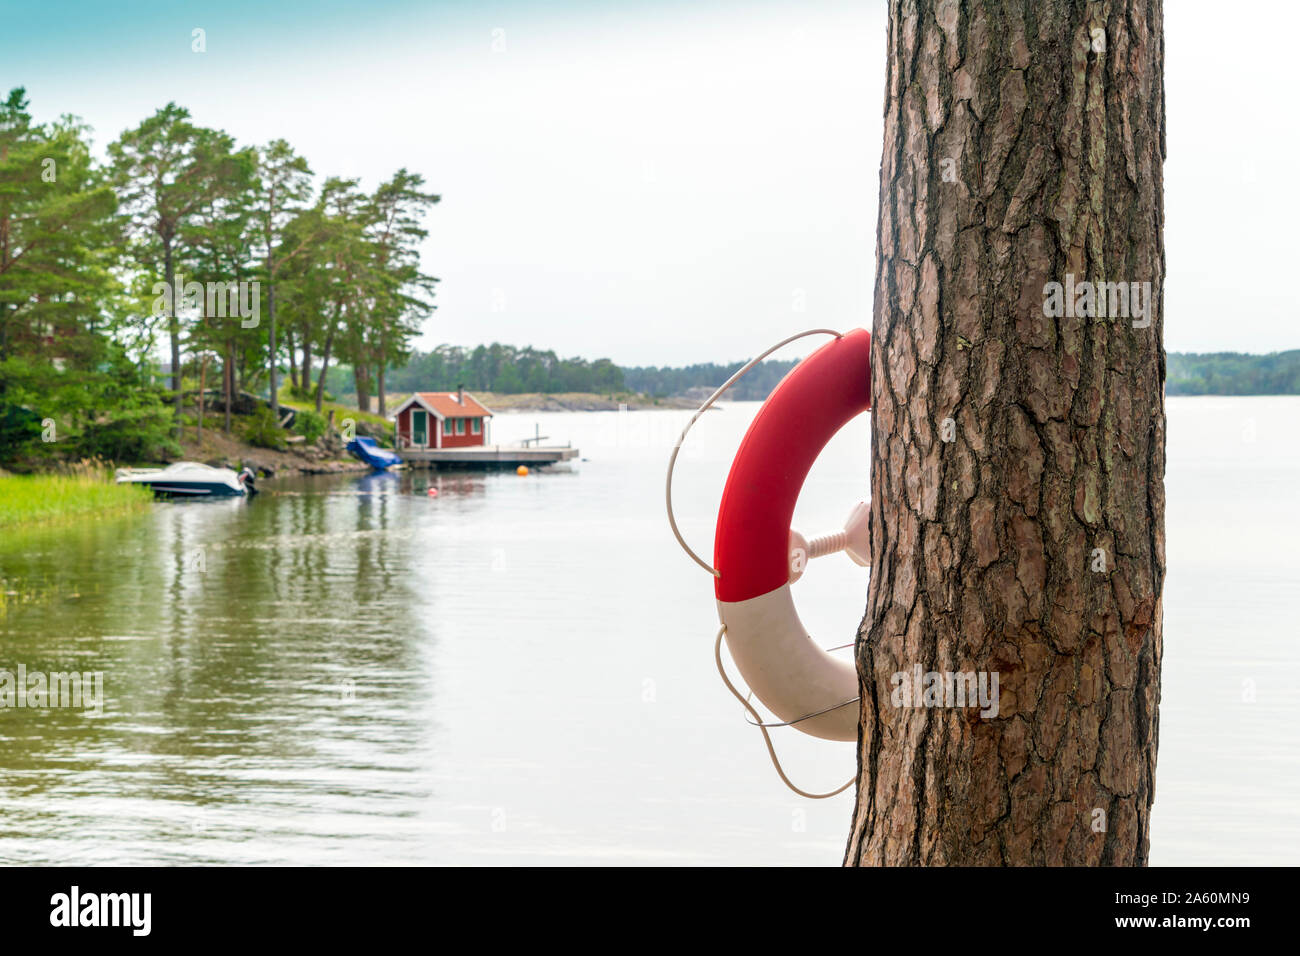 Life belt hanging on tree trunk by river against sky in Loftahammar, Sweden Stock Photo